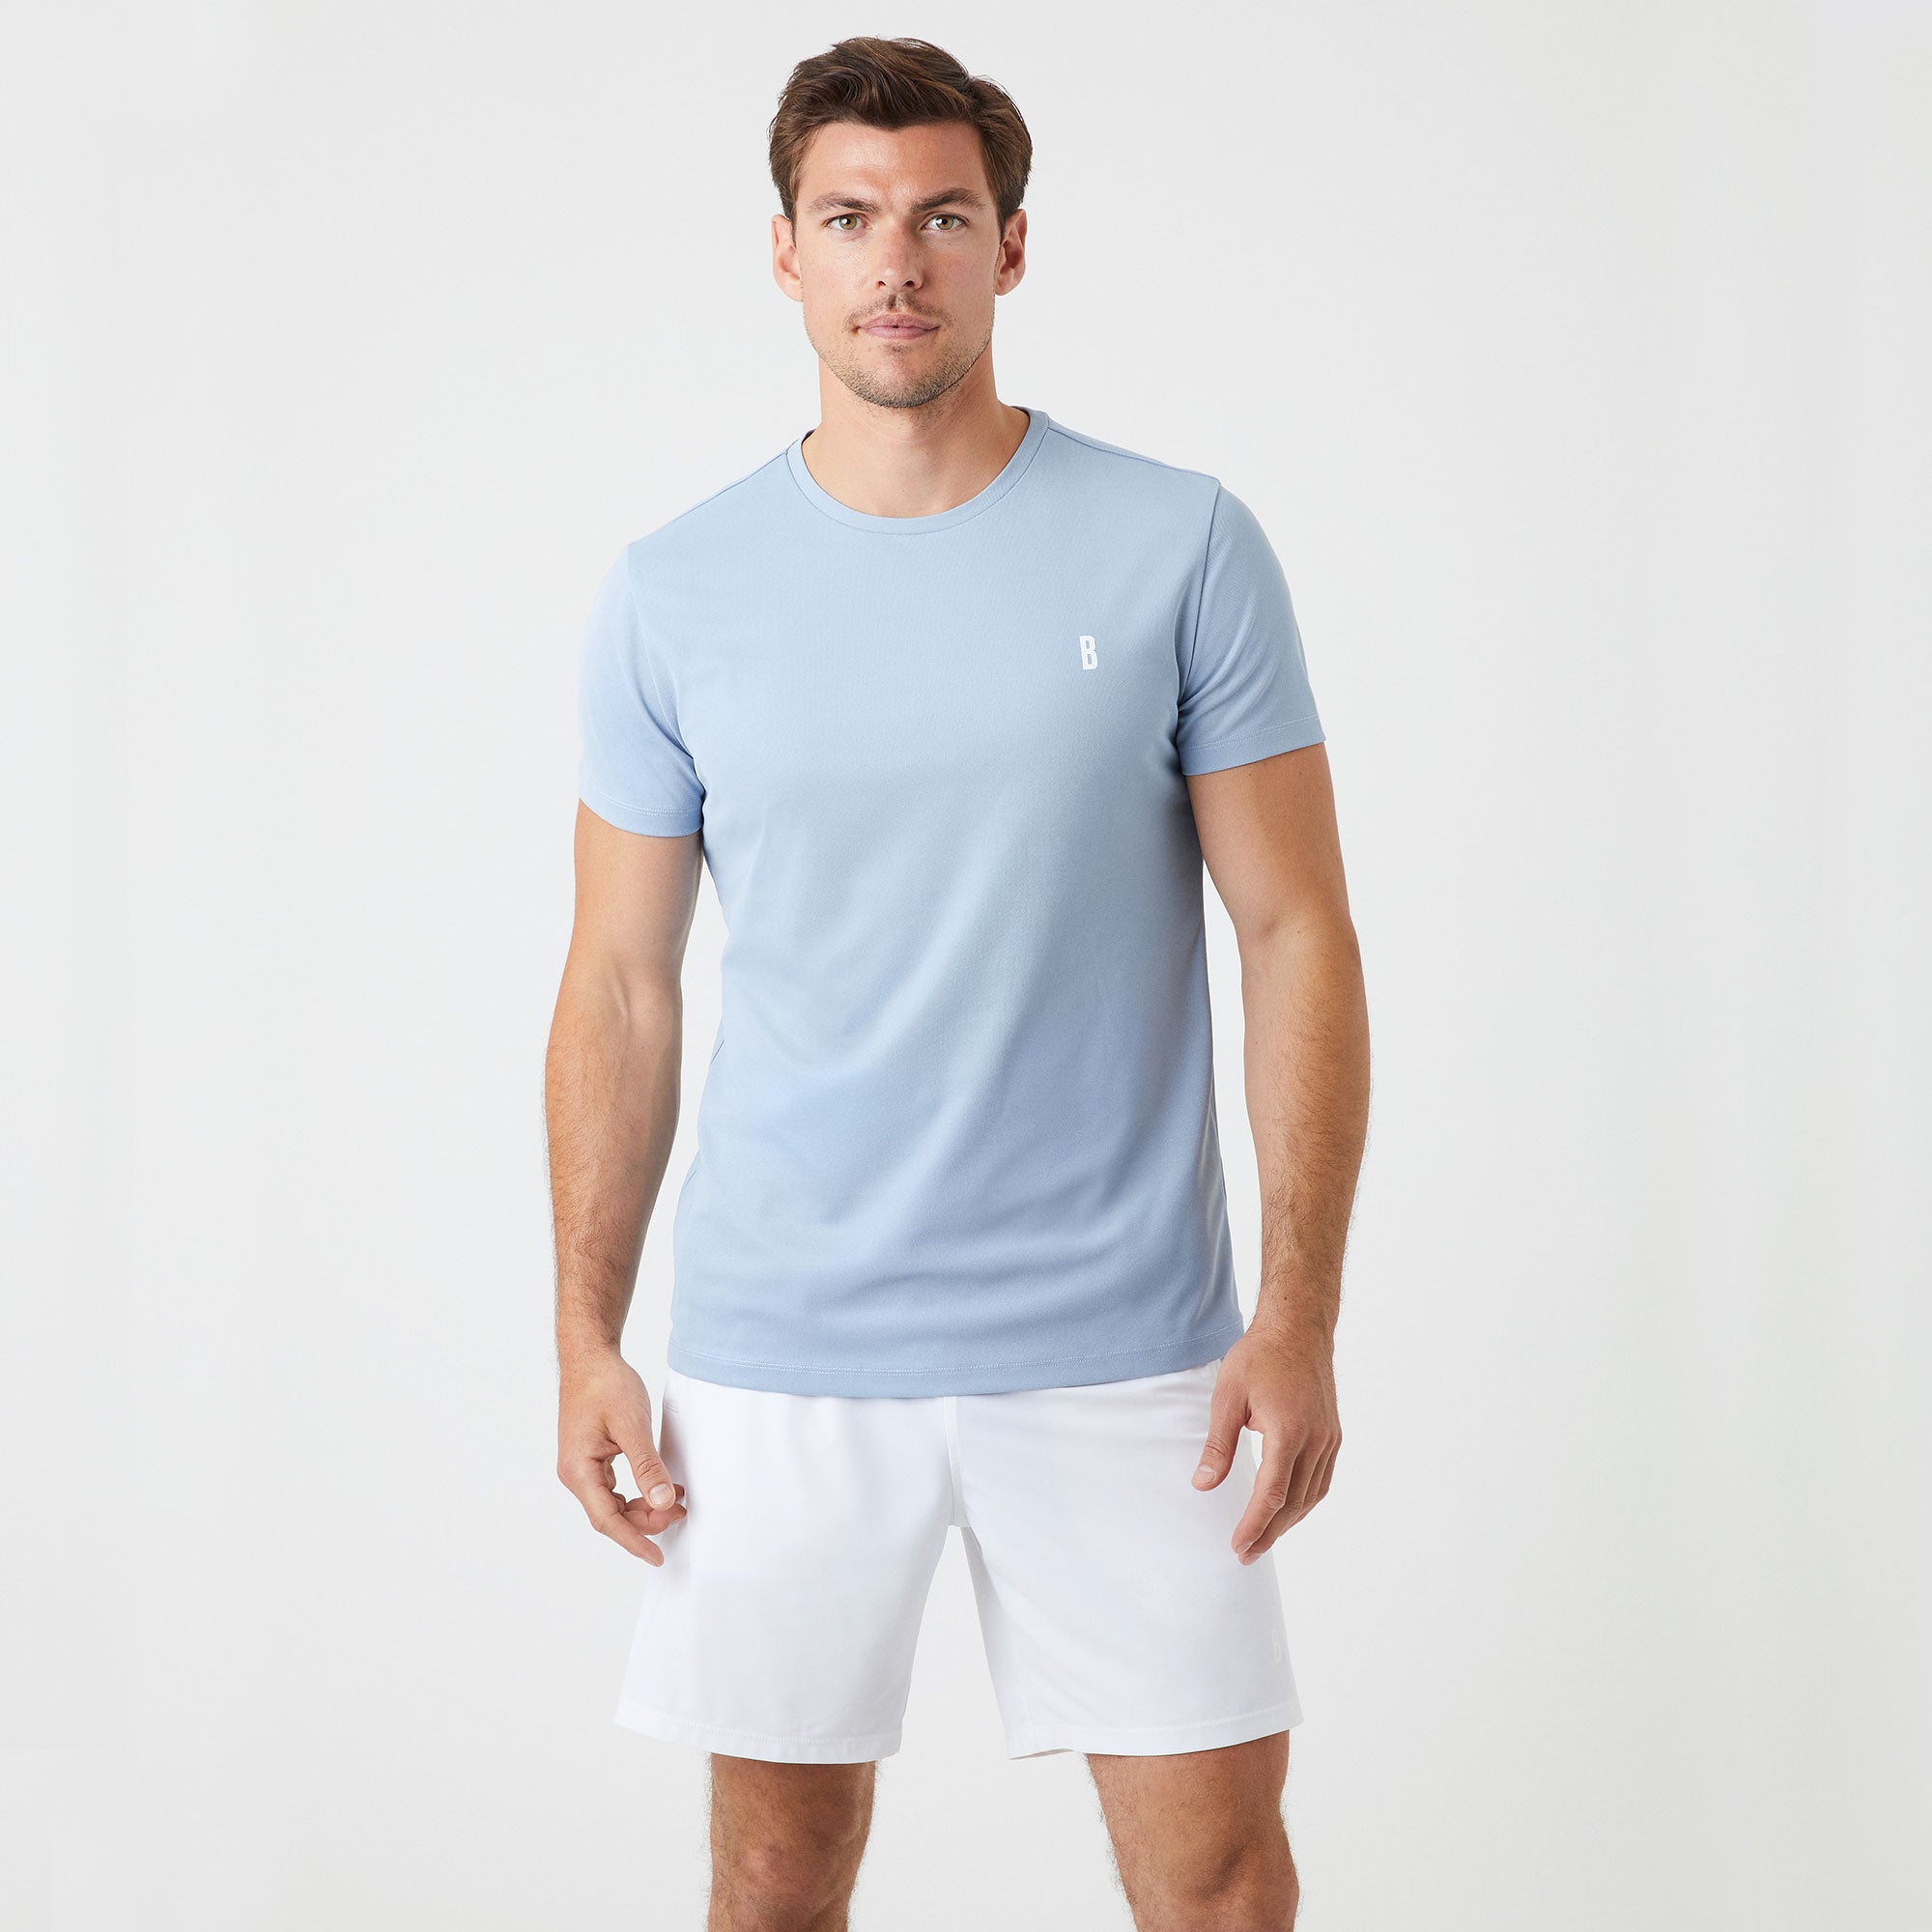 Björn Borg Ace Men's Stripe Tennis Shirt Blue (1)